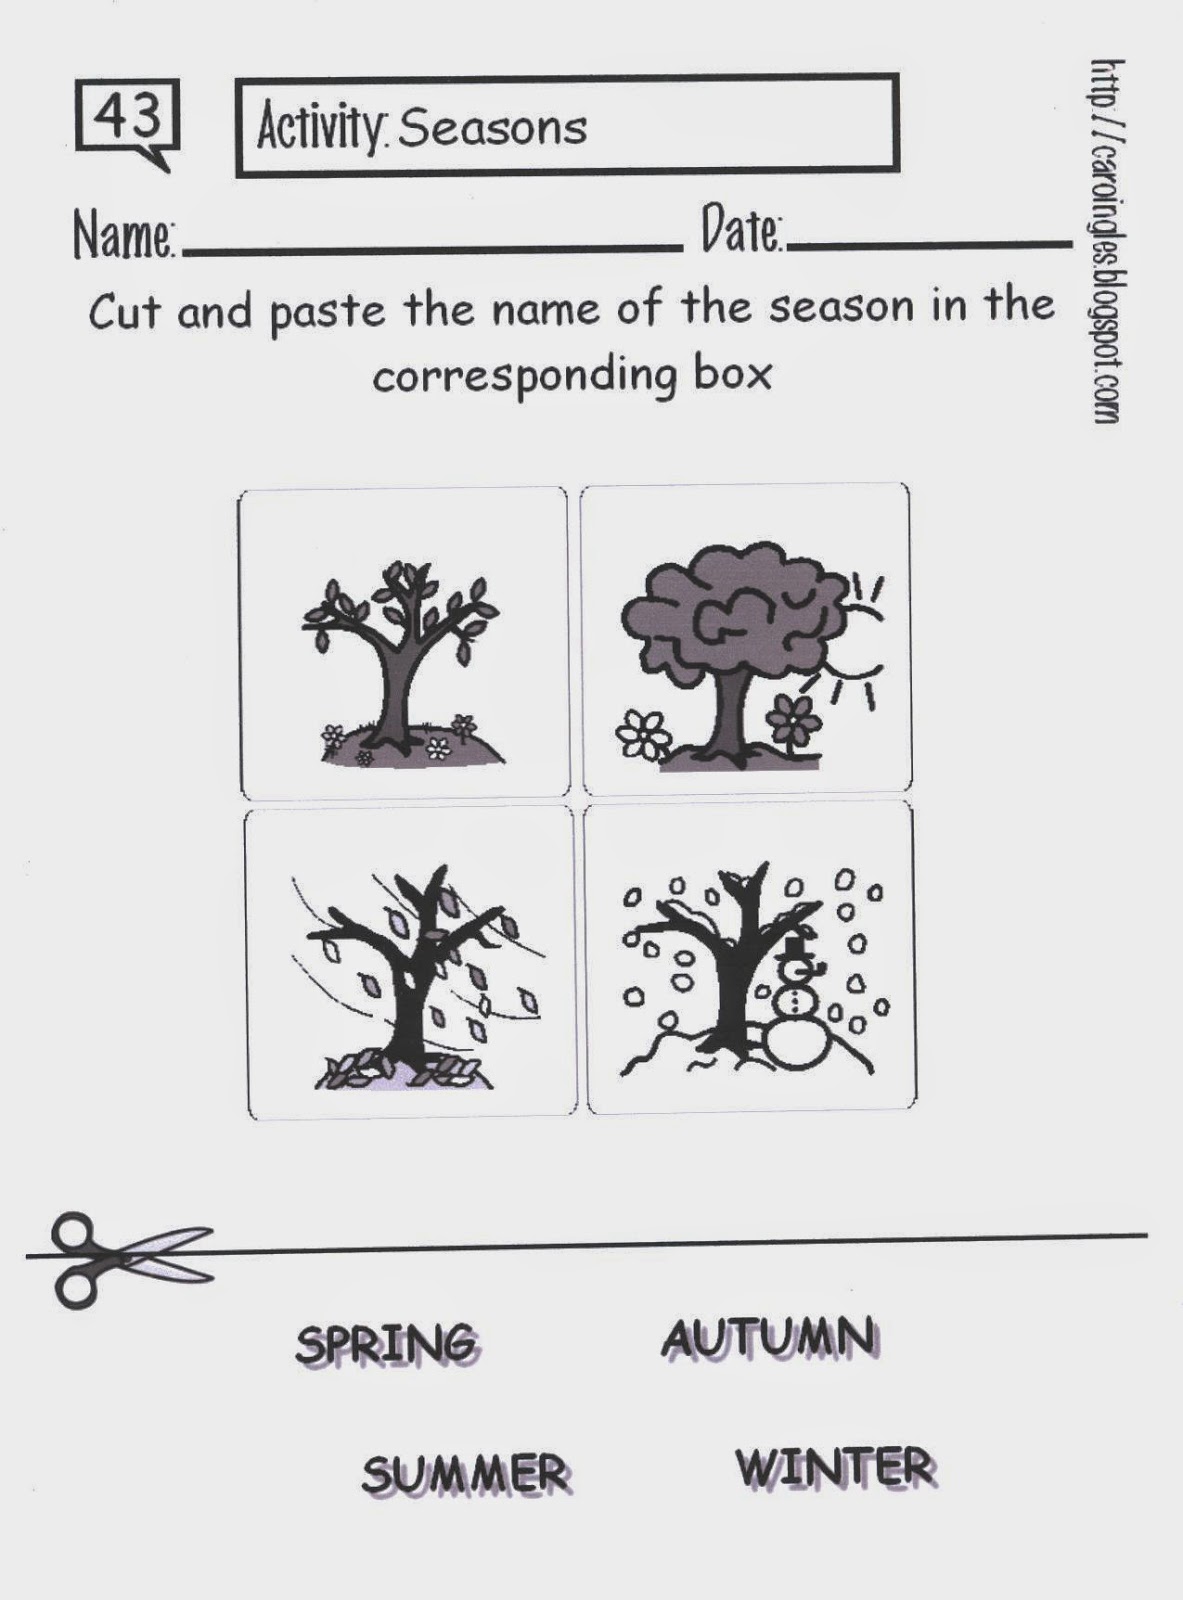 Seasons activities. Seasons Vocabulary for Kids. Seasons and activities Worksheets. Winter Spring Summer autumn Worksheets. Caroingles.blogspot.